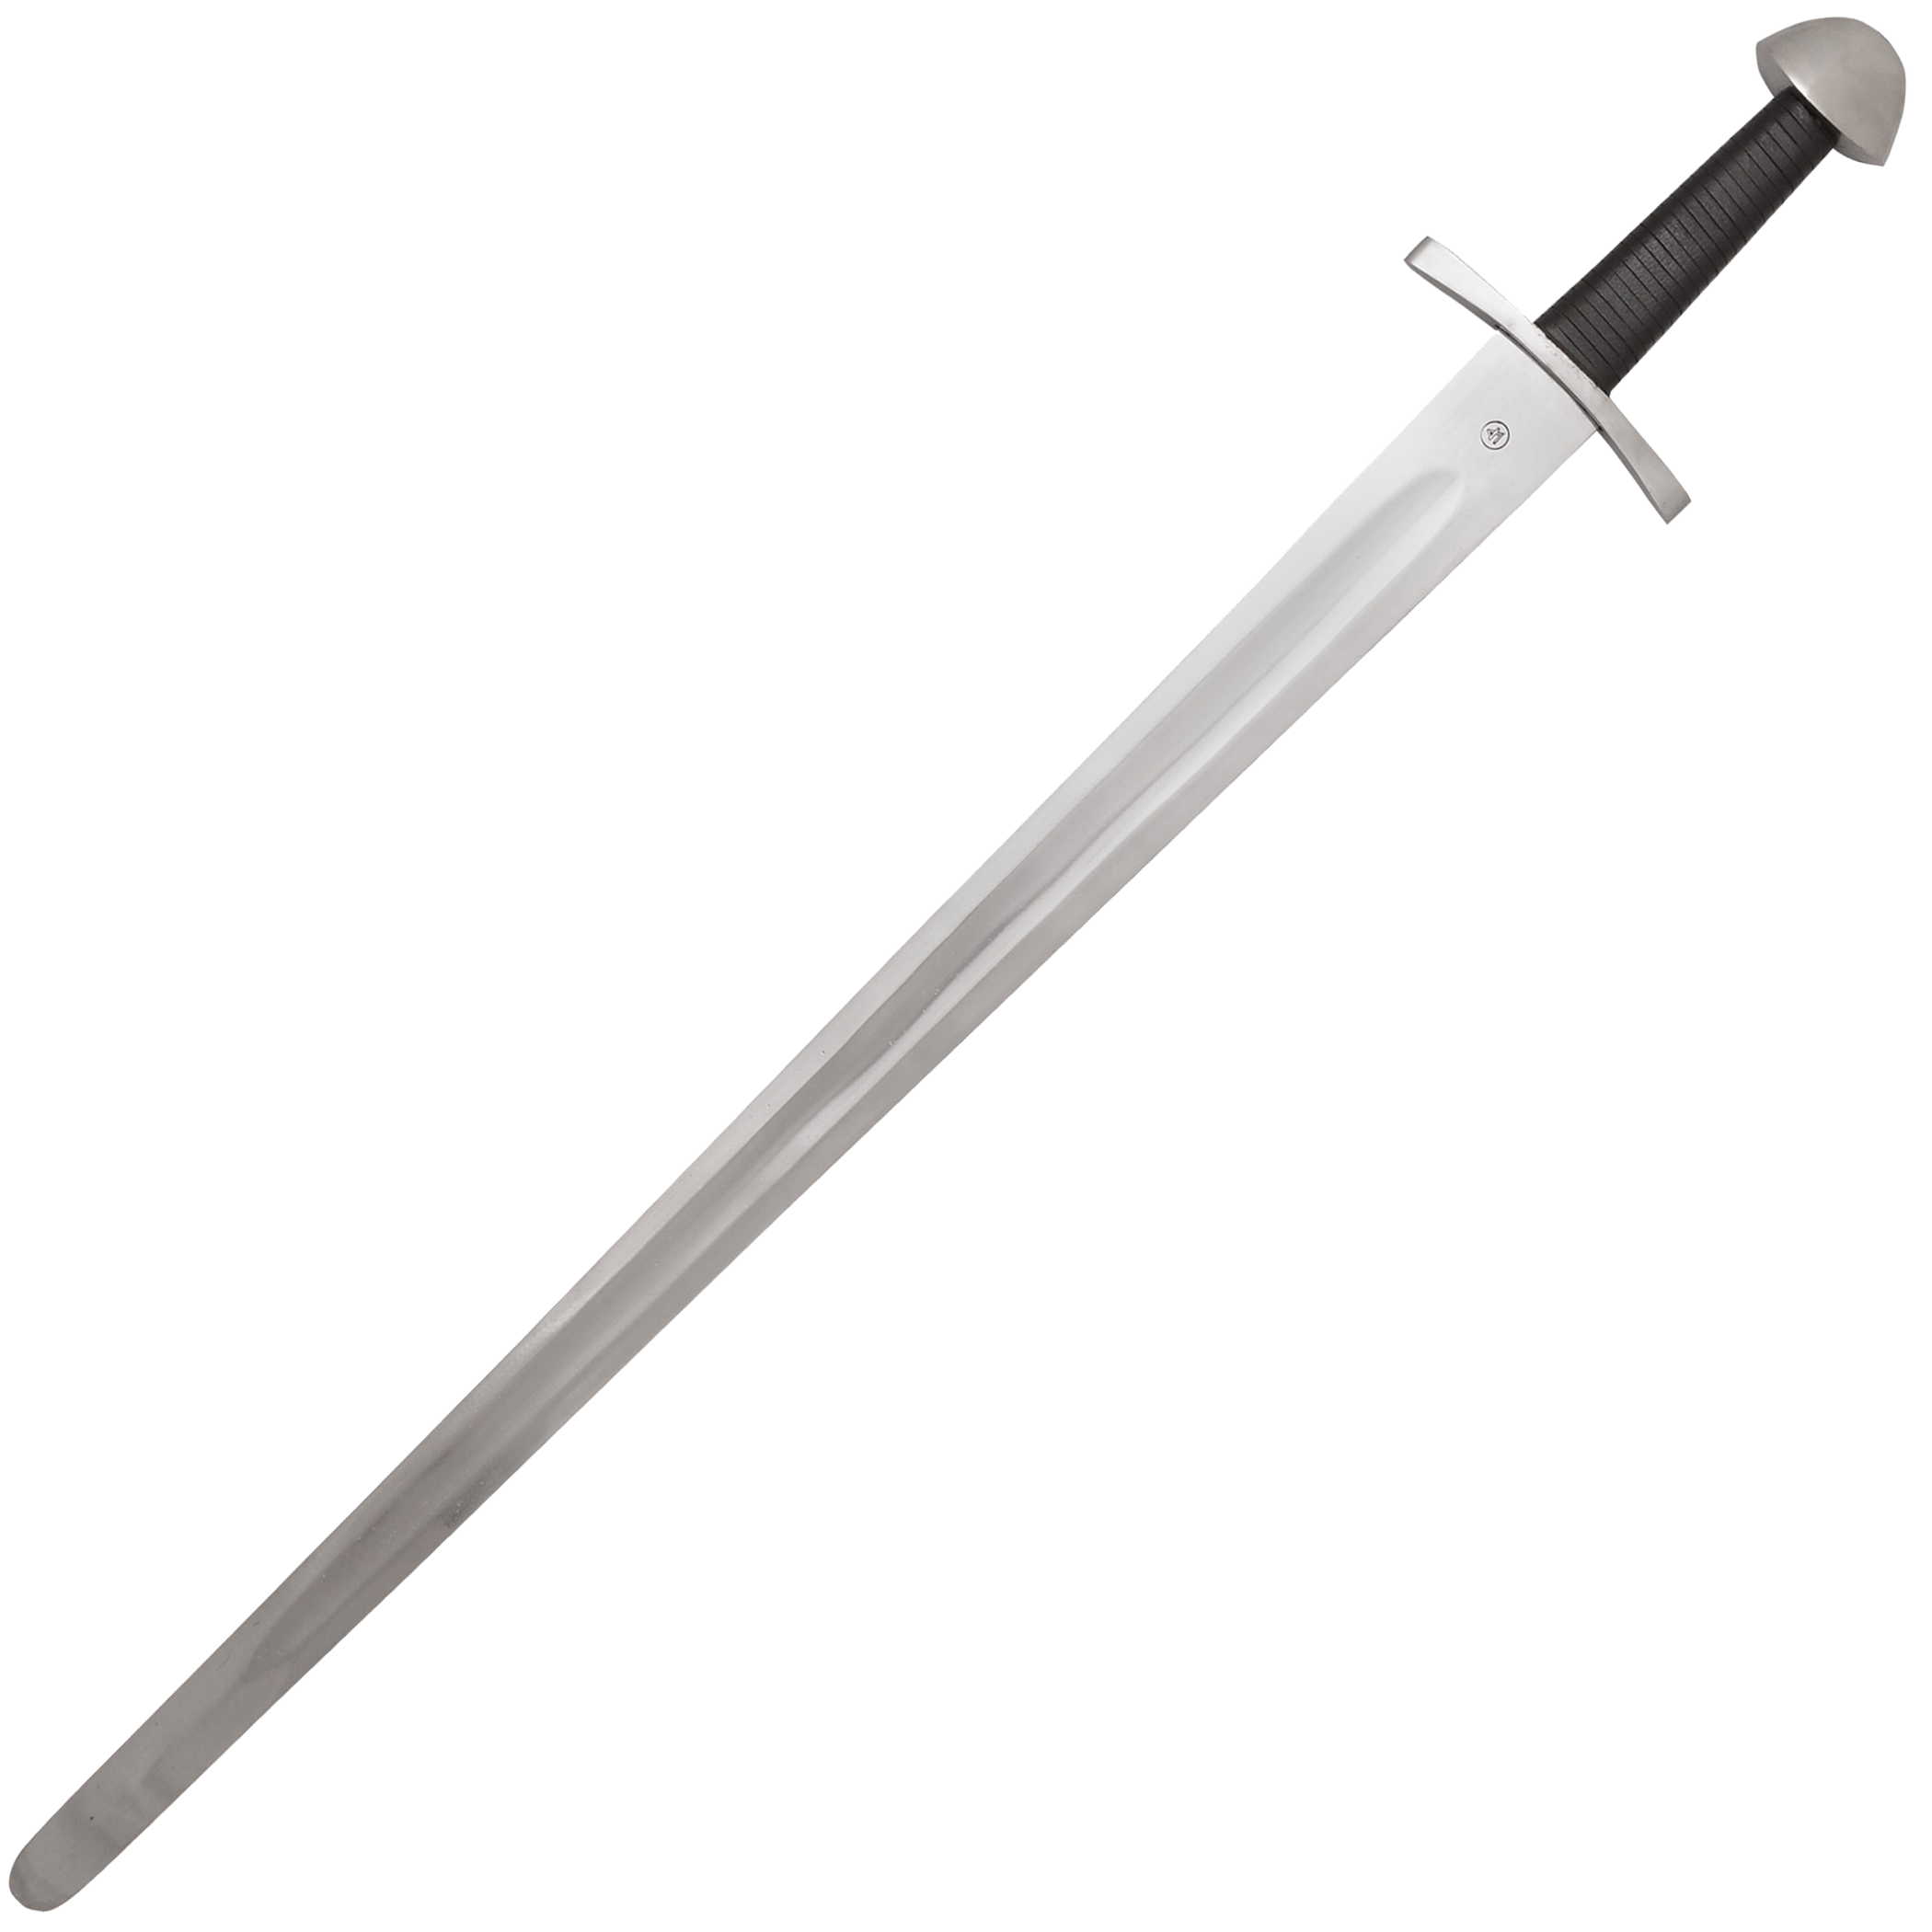 Normannischer Einhänder, Schaukampfschwert SK-B